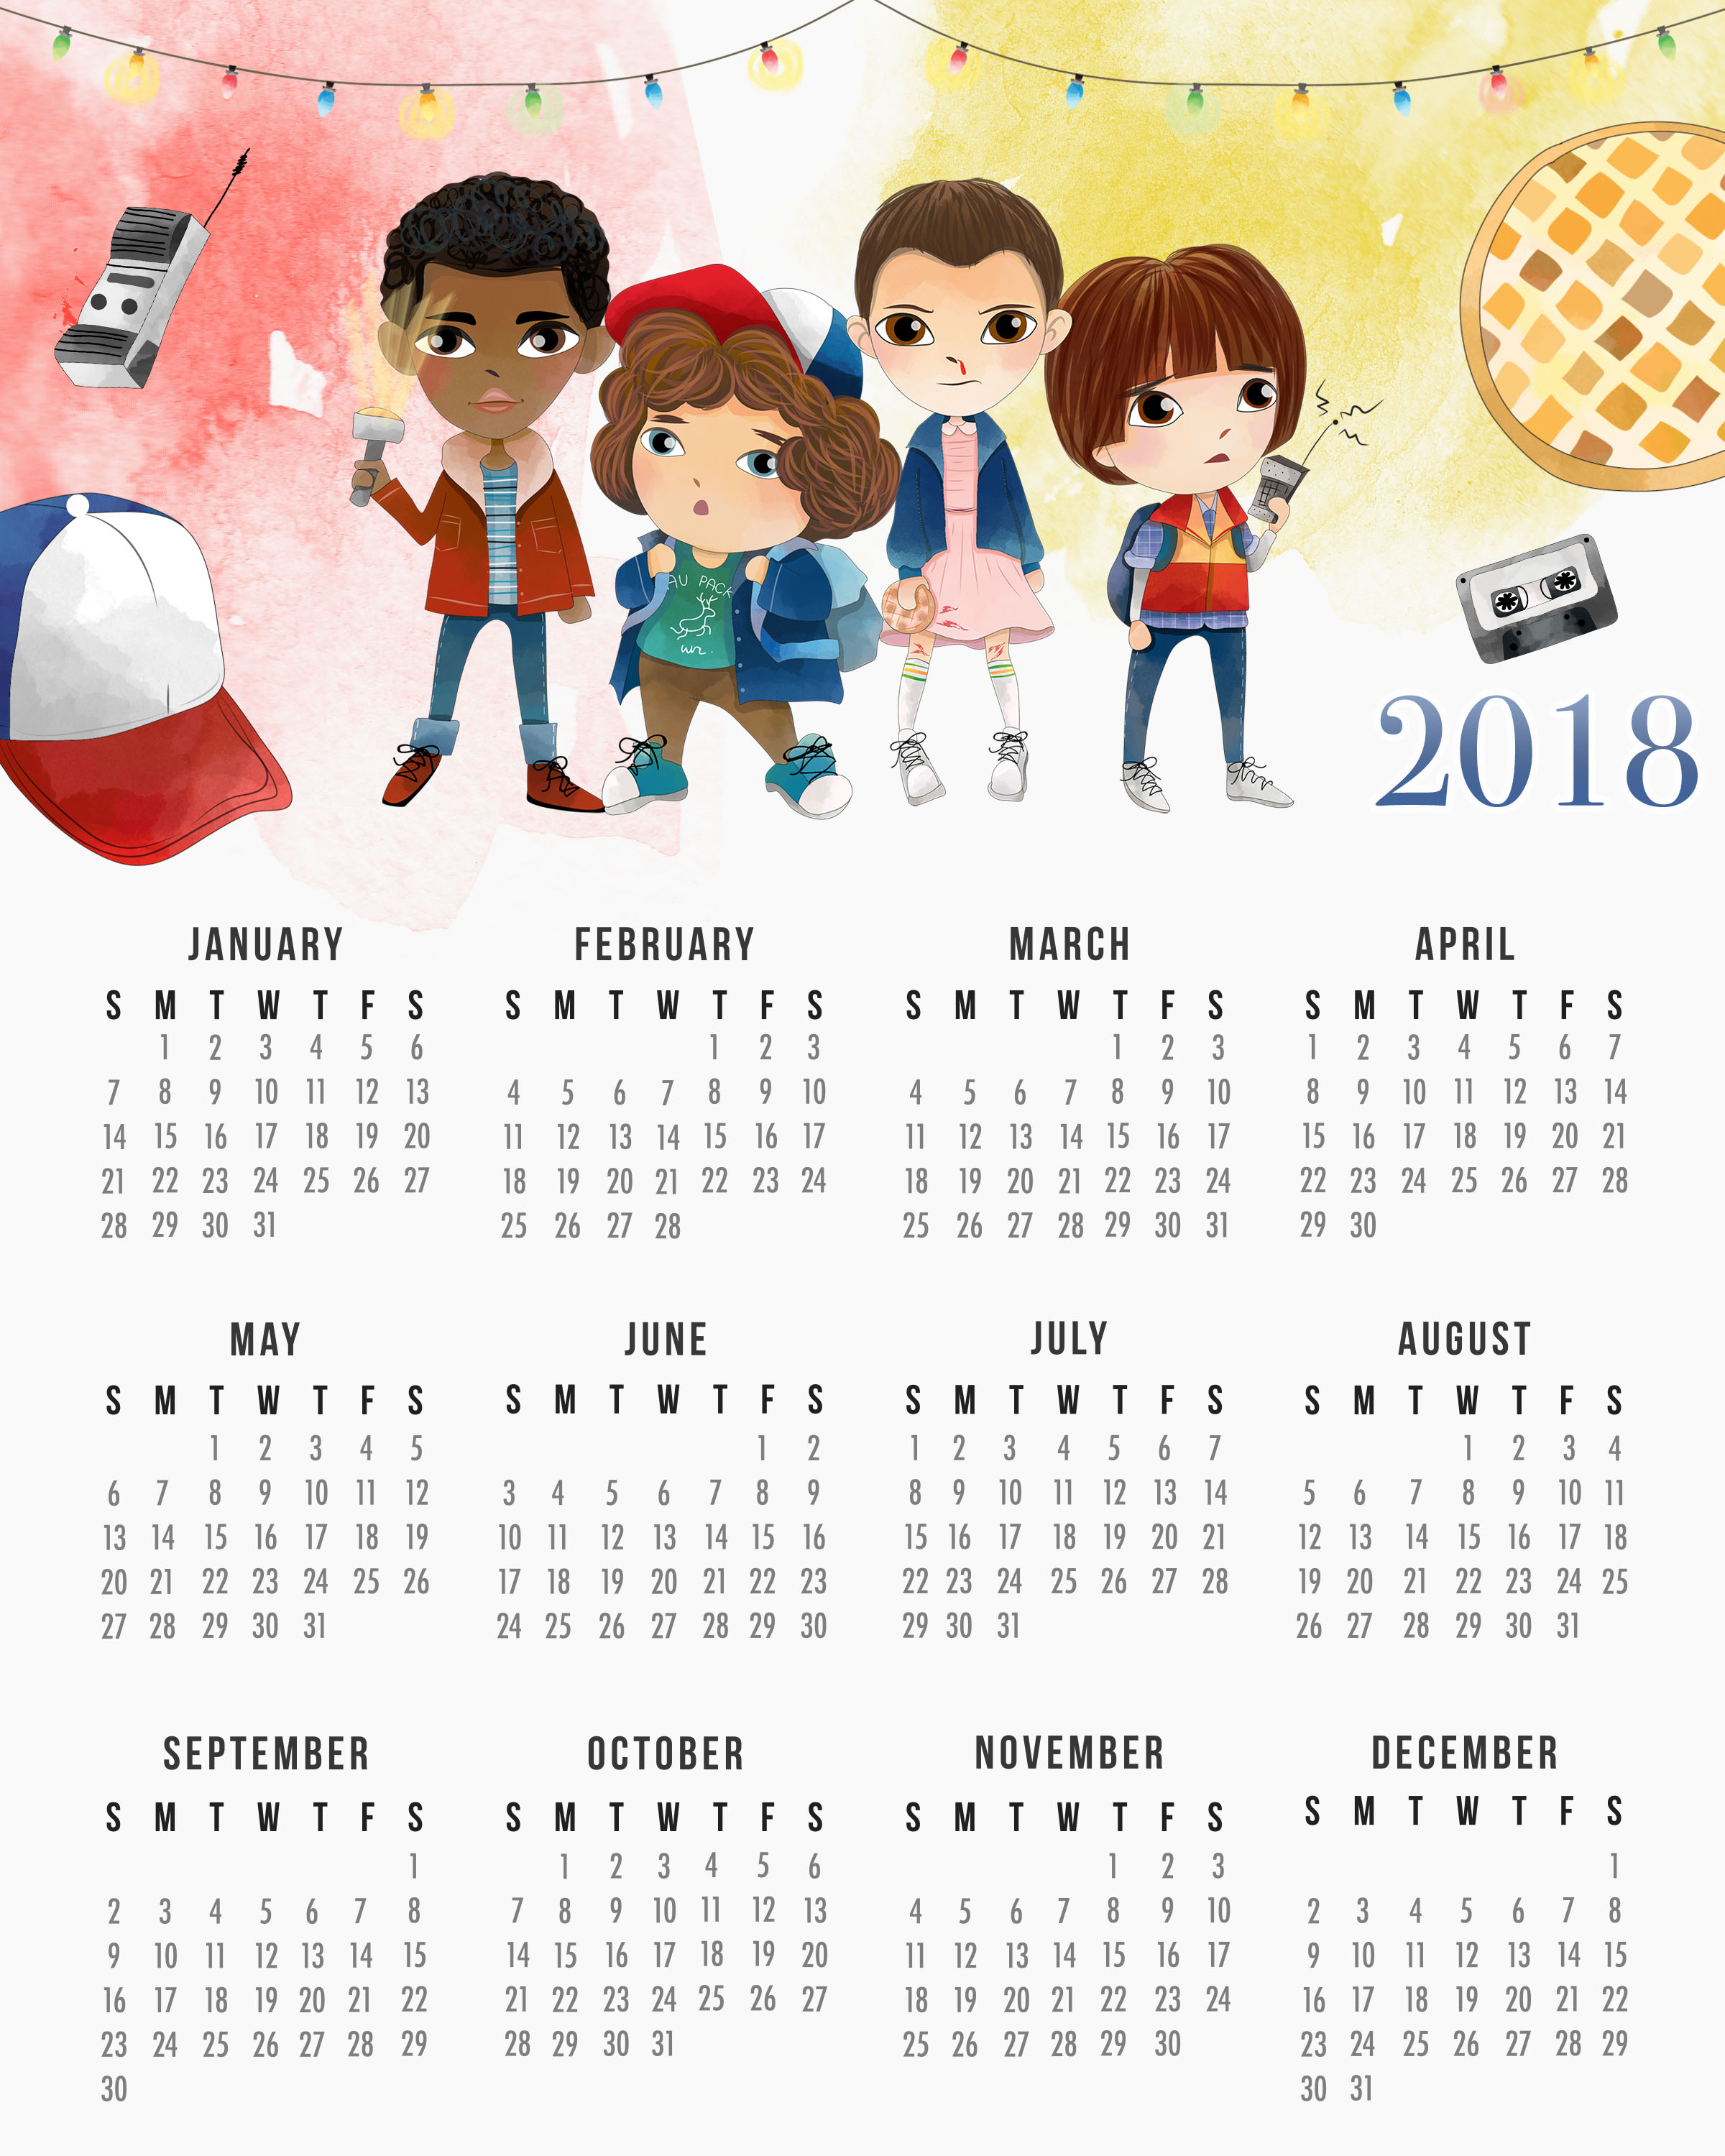 http://thecottagemarket.com/wp-content/uploads/2017/10/TCM-ST-2018-Calendar-8x10.jpg